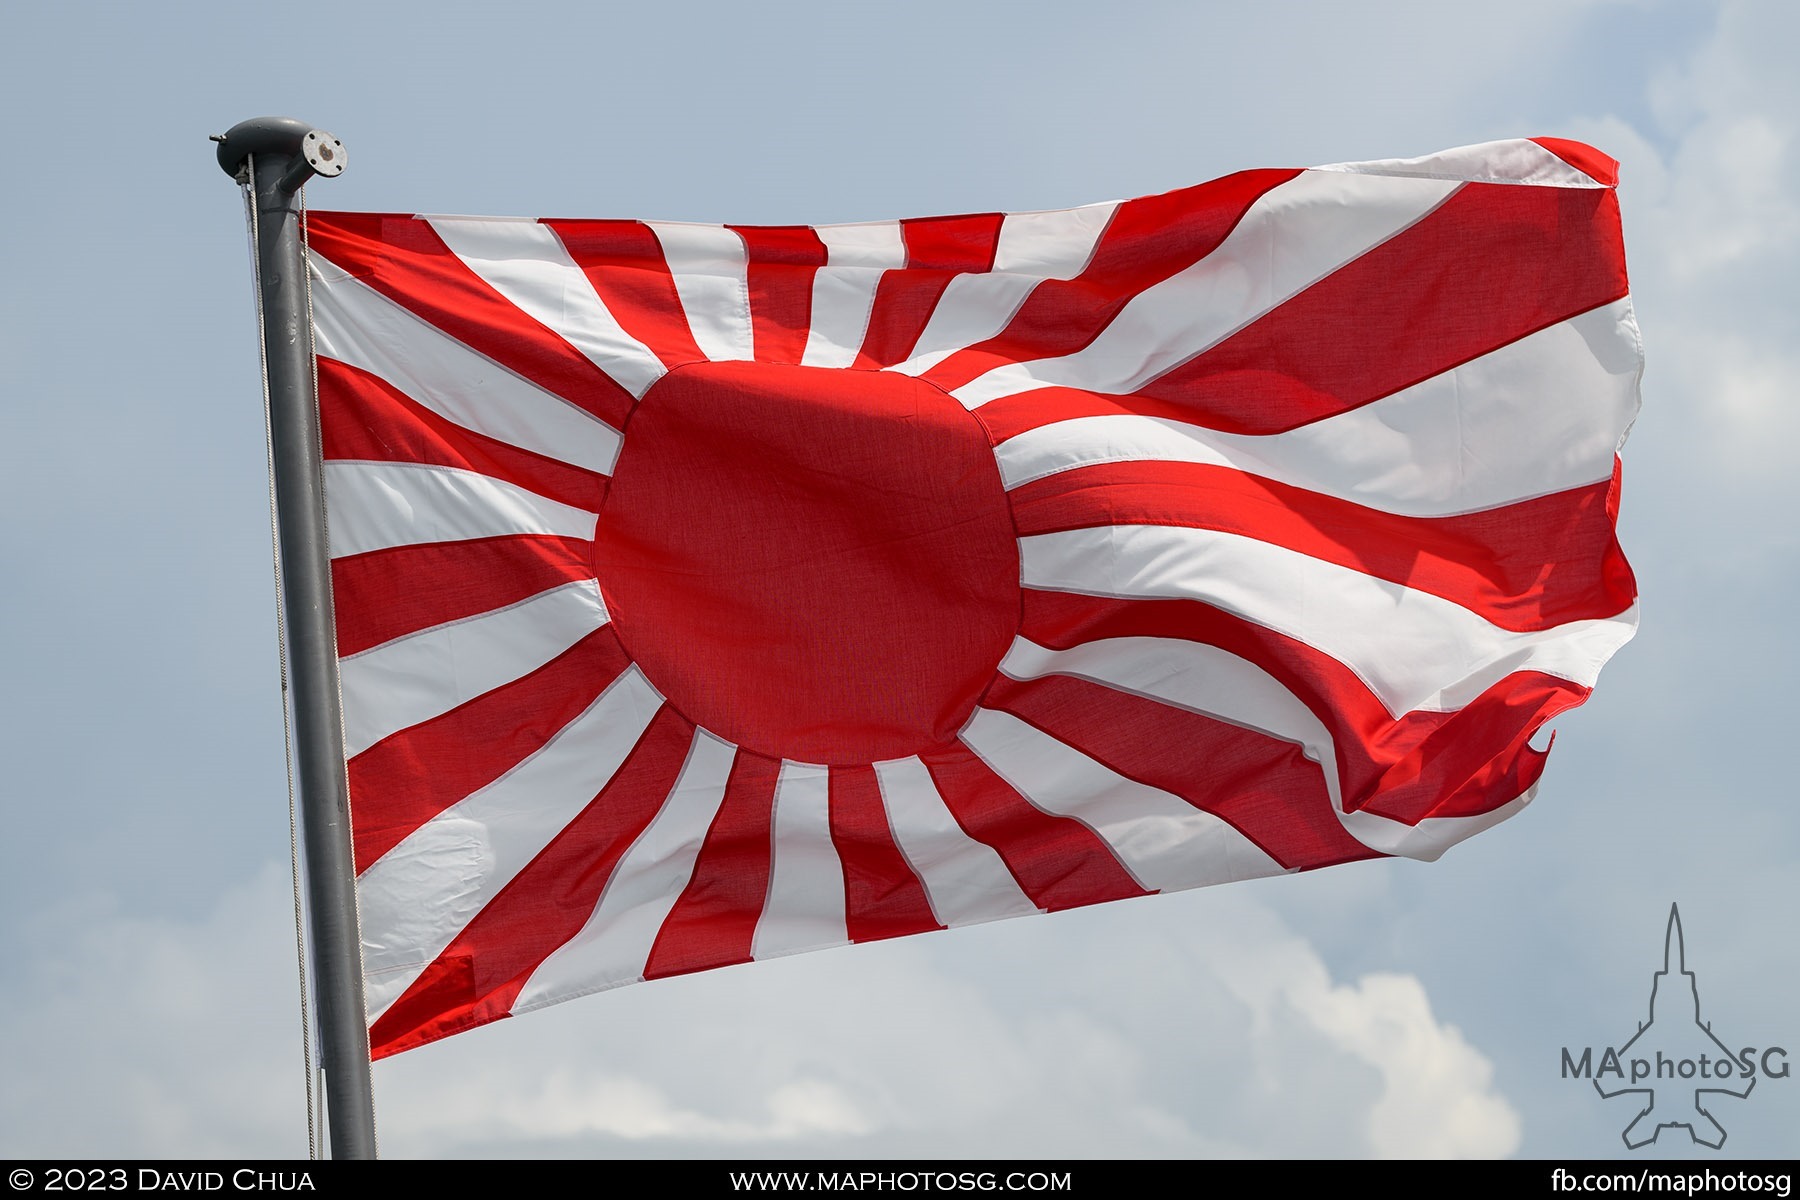 The Rising Sun Flag flying on the JS Kumano